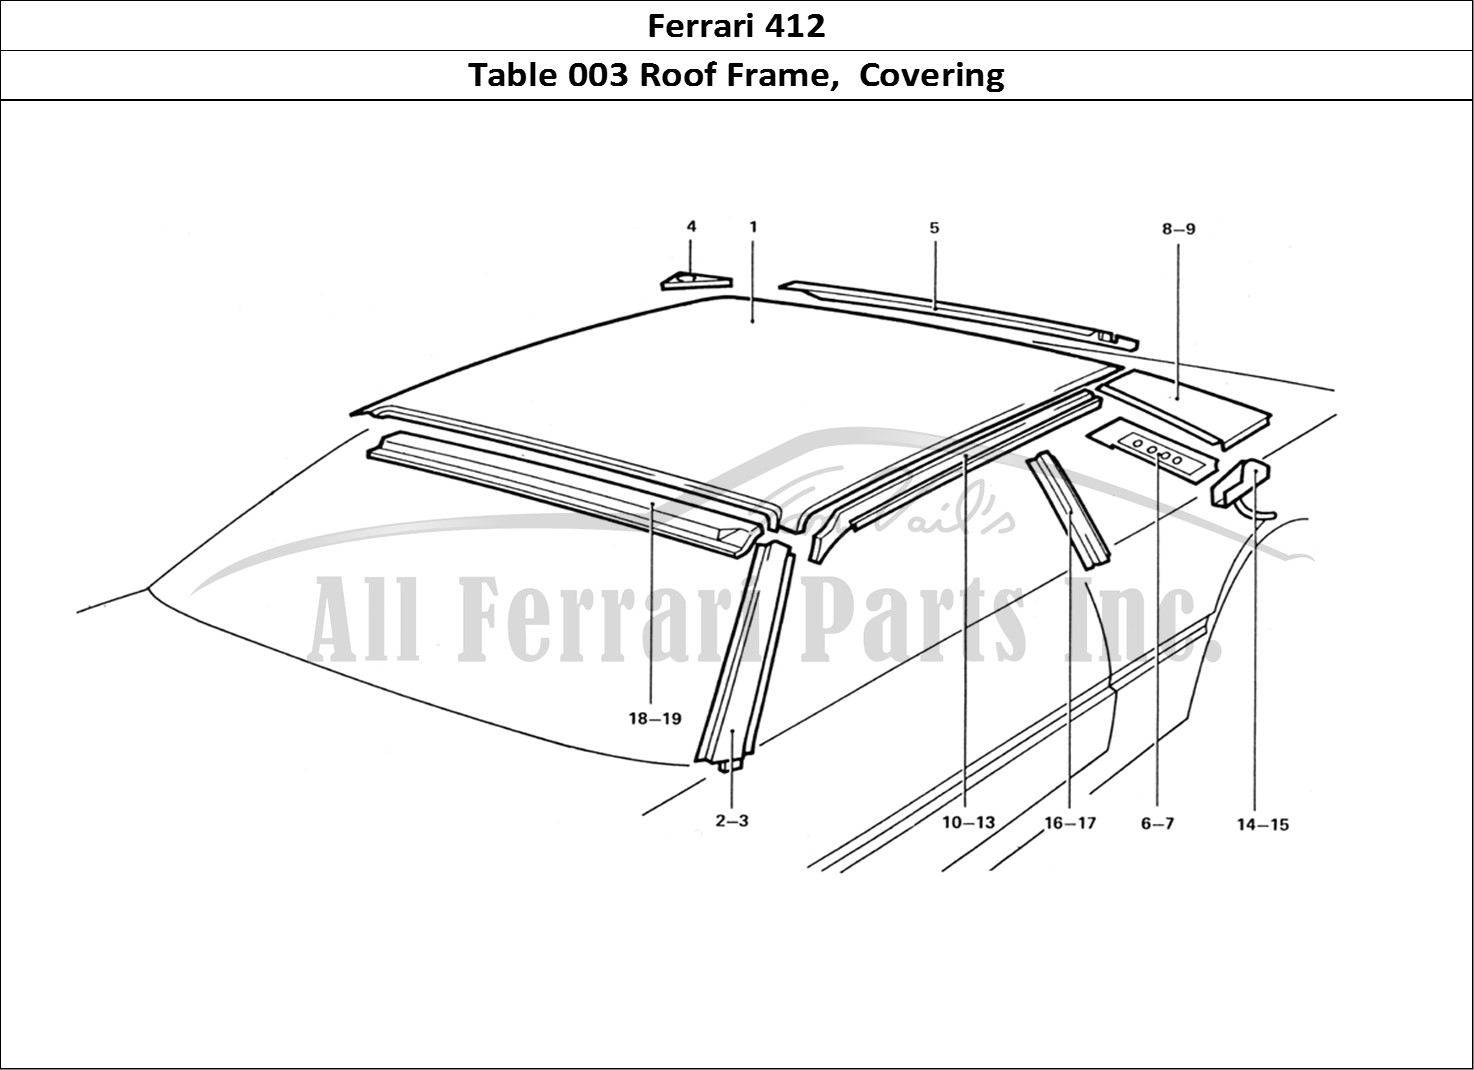 Ferrari Parts Ferrari 412 (Coachwork) Page 003 Roof Panels